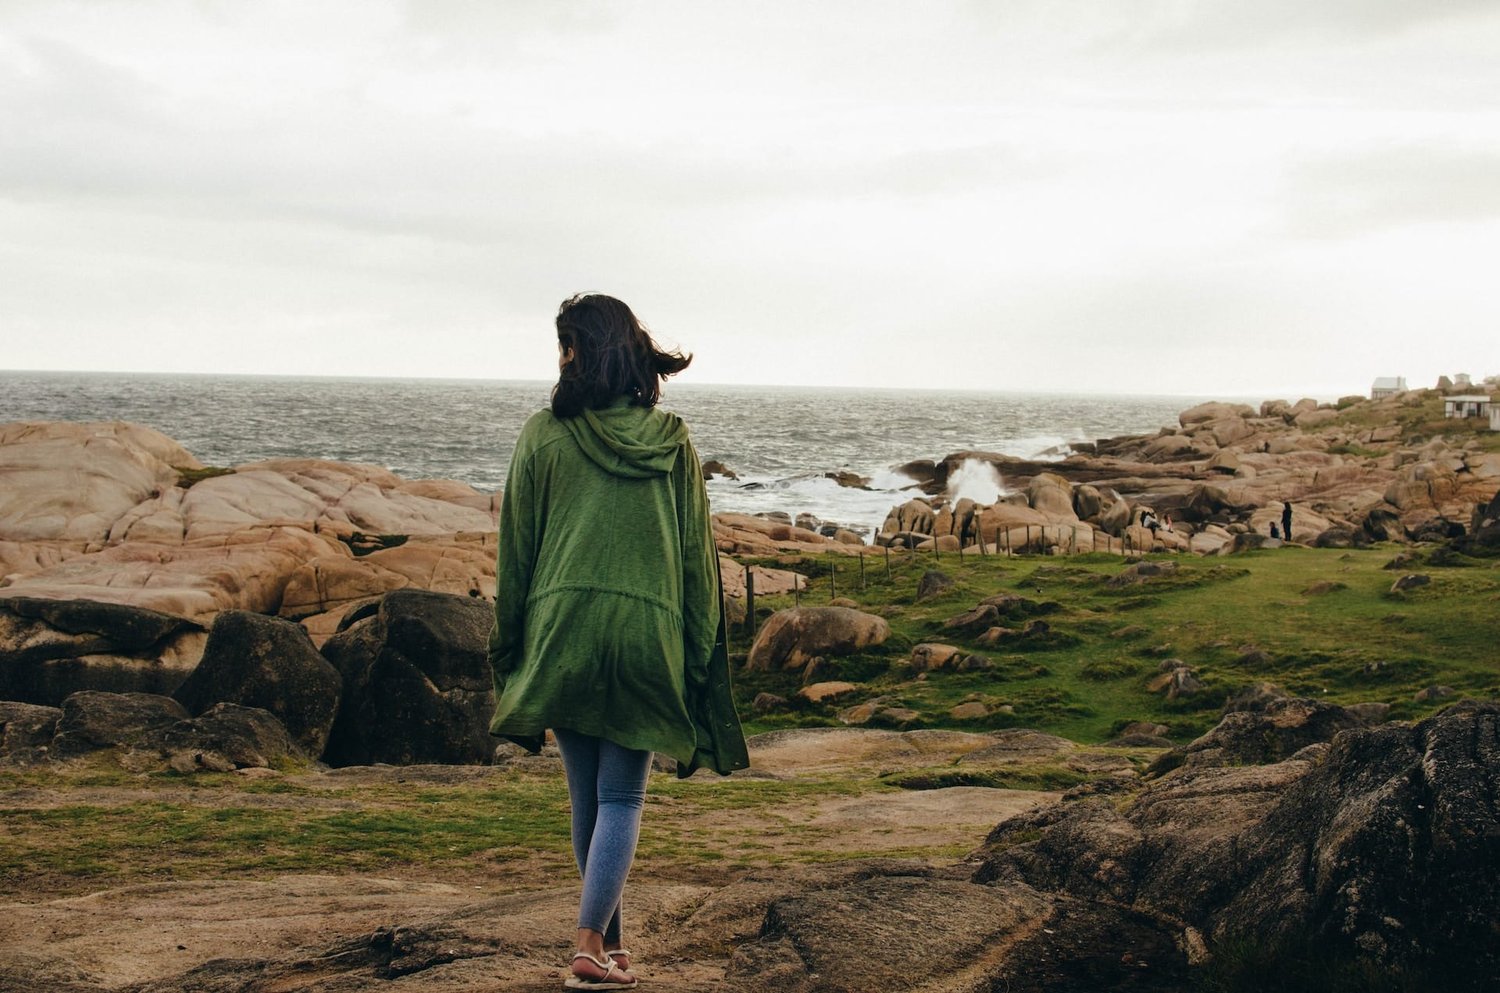 women walking alongside the ocean cliffs in jeans and a long green jacket for article on walking benefits.